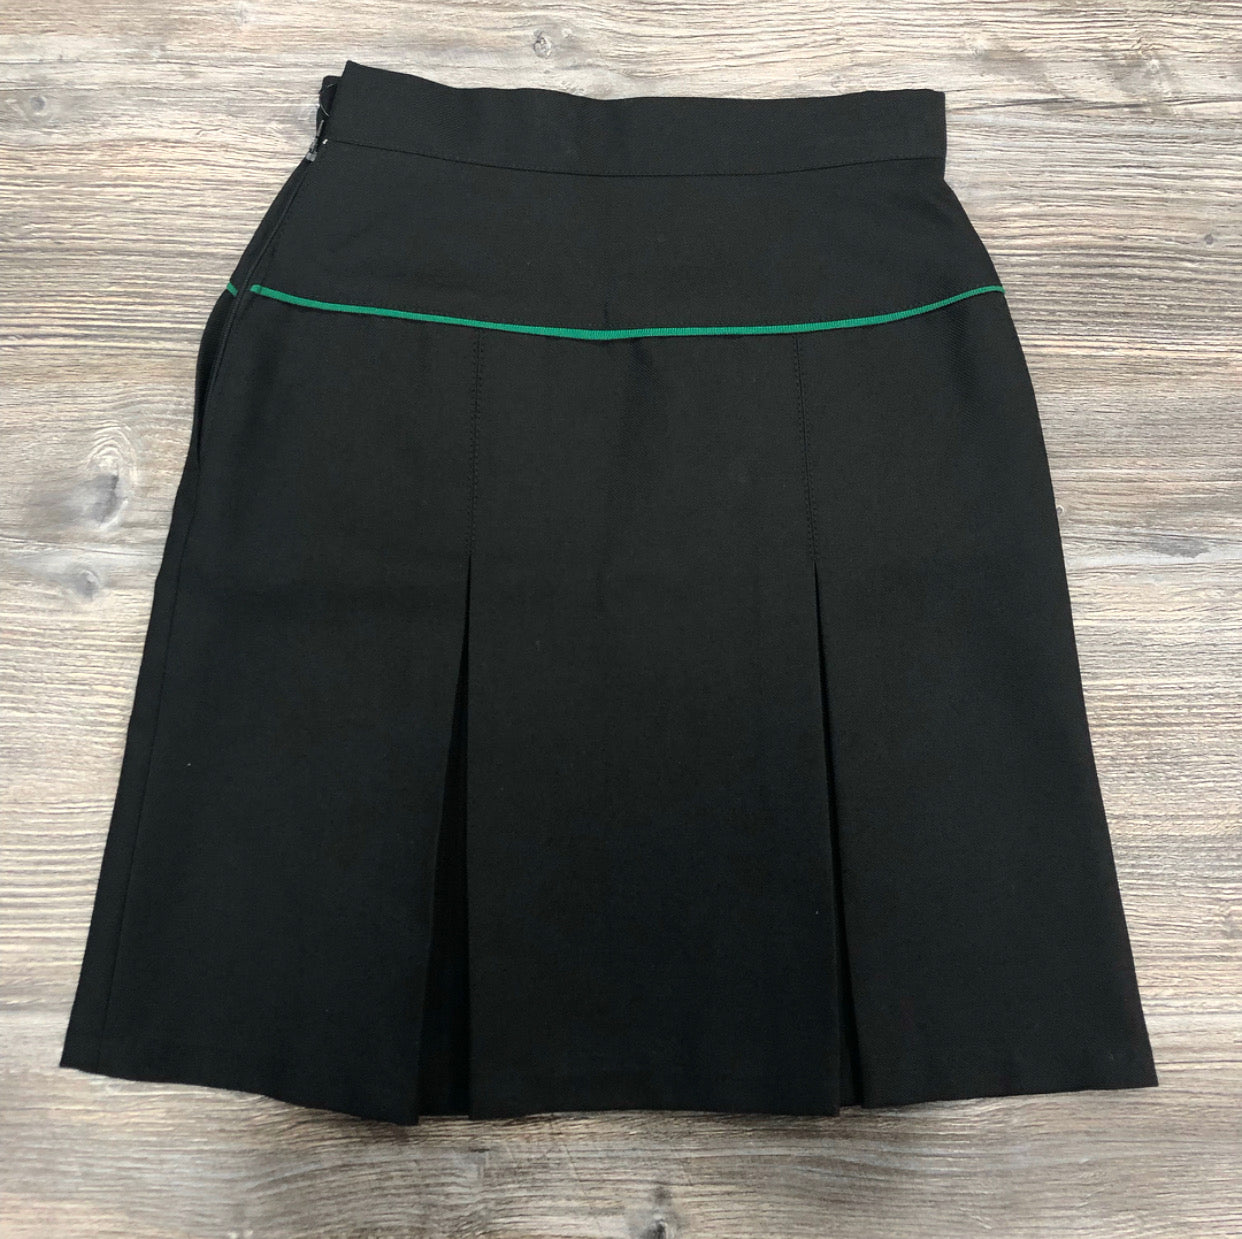 Bowland High School Skirt